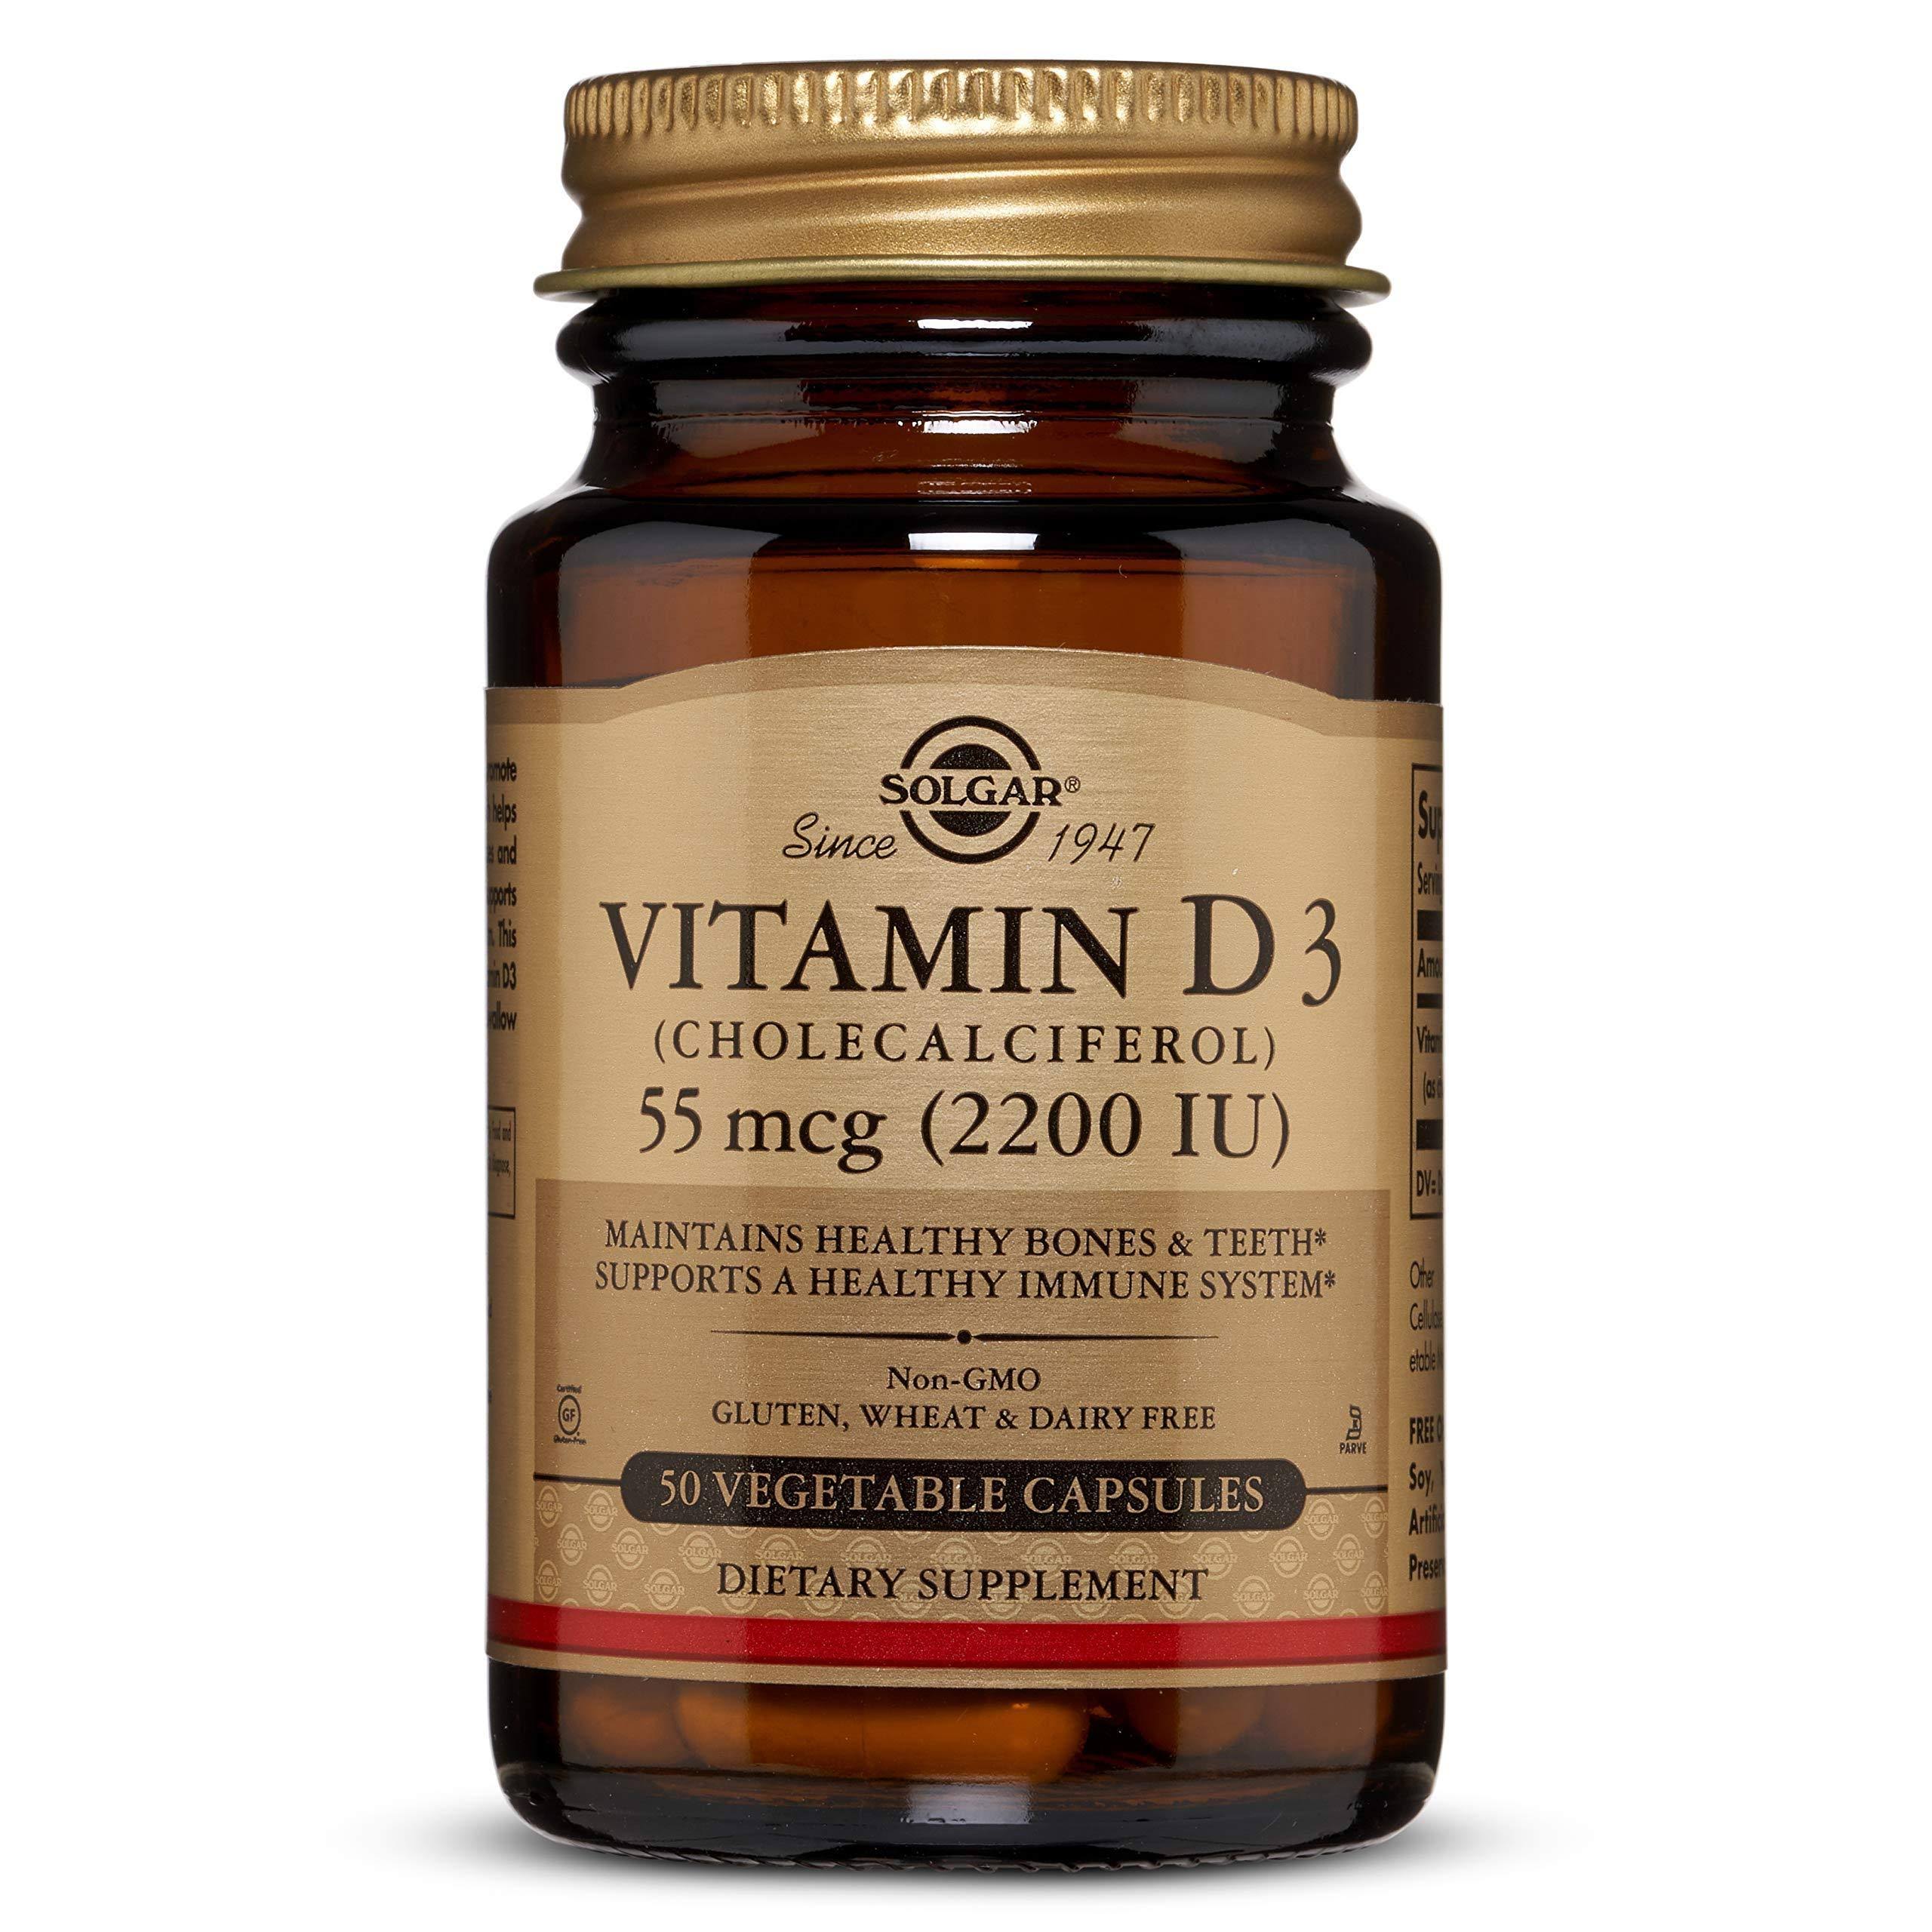 Solgar Natural Vitamin D3 Cholecalciferol 2200 IU